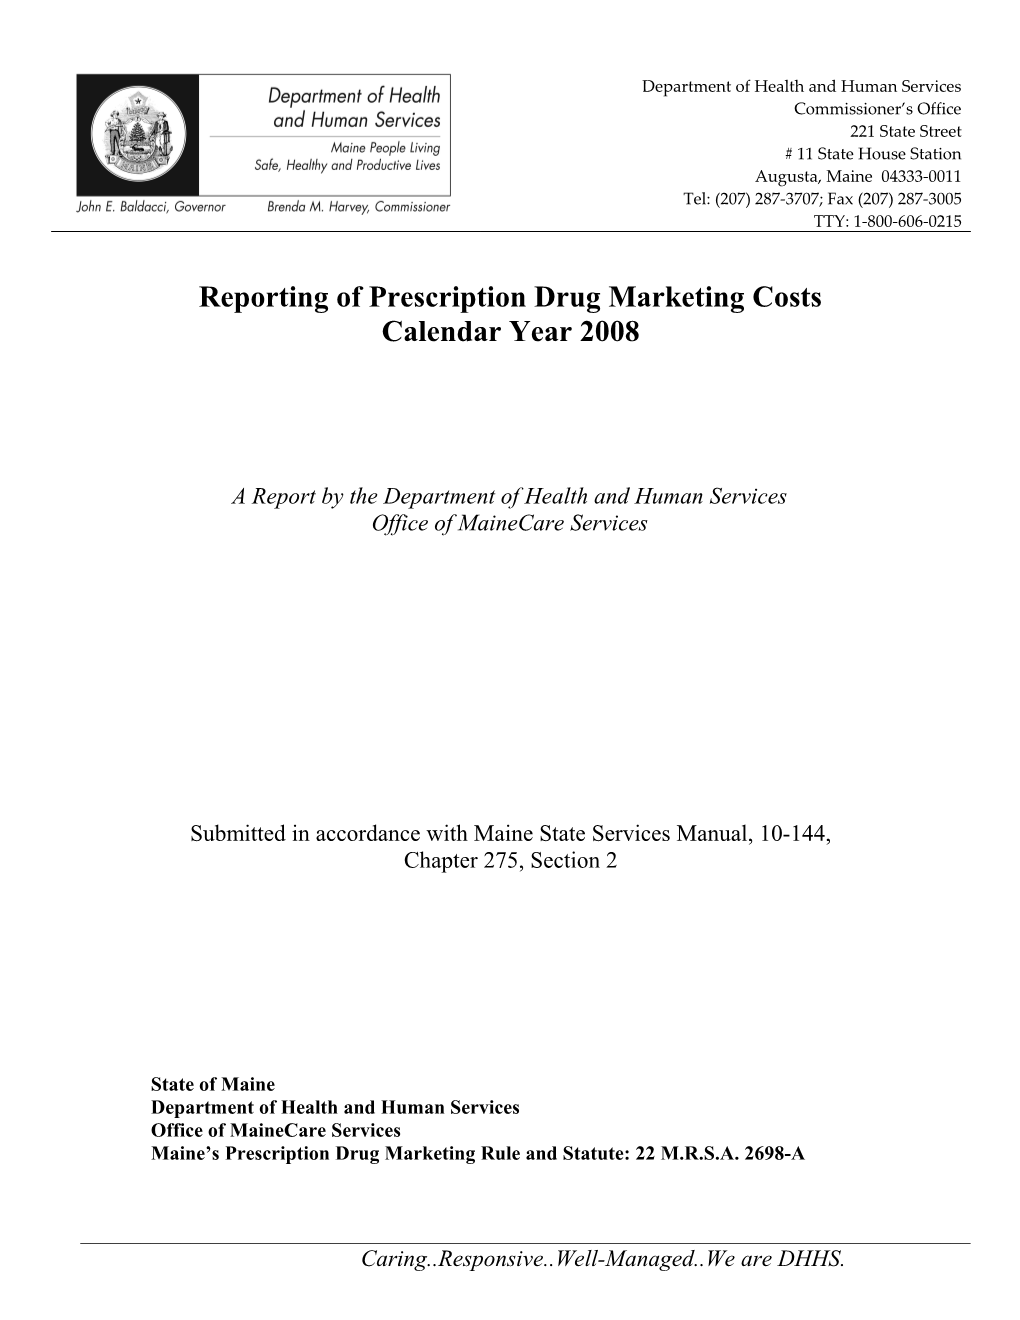 Reporting of Prescription Drug Marketing Costs Calendar Year 2008